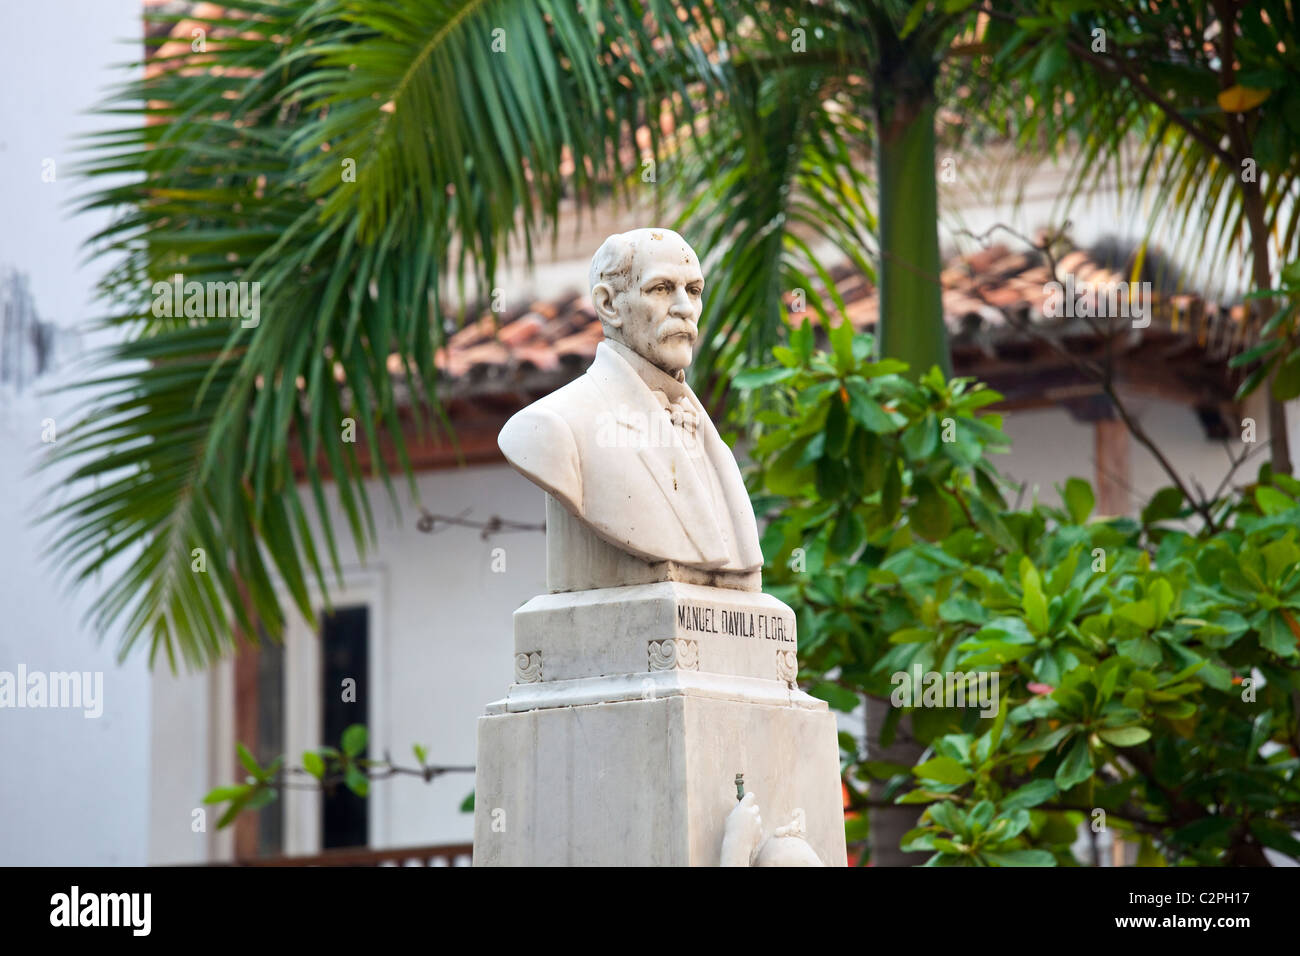 Statue von Manuel Davila Florez in der Altstadt, Cartagena, Kolumbien Stockfoto